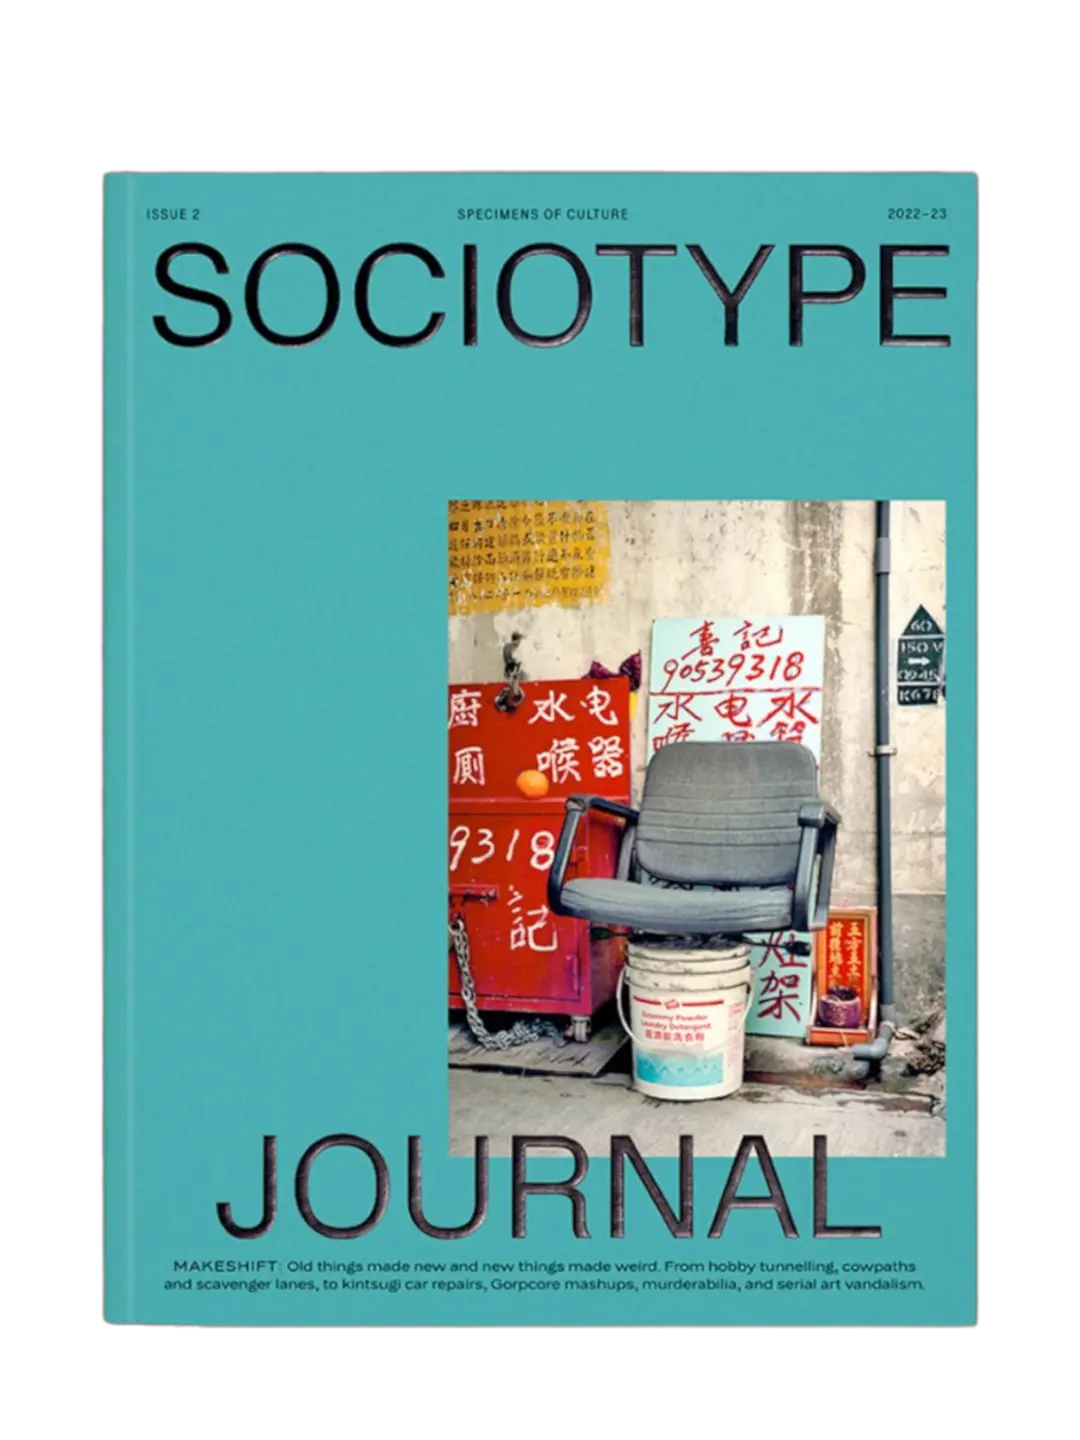 Journal Issue 2: Makeshift